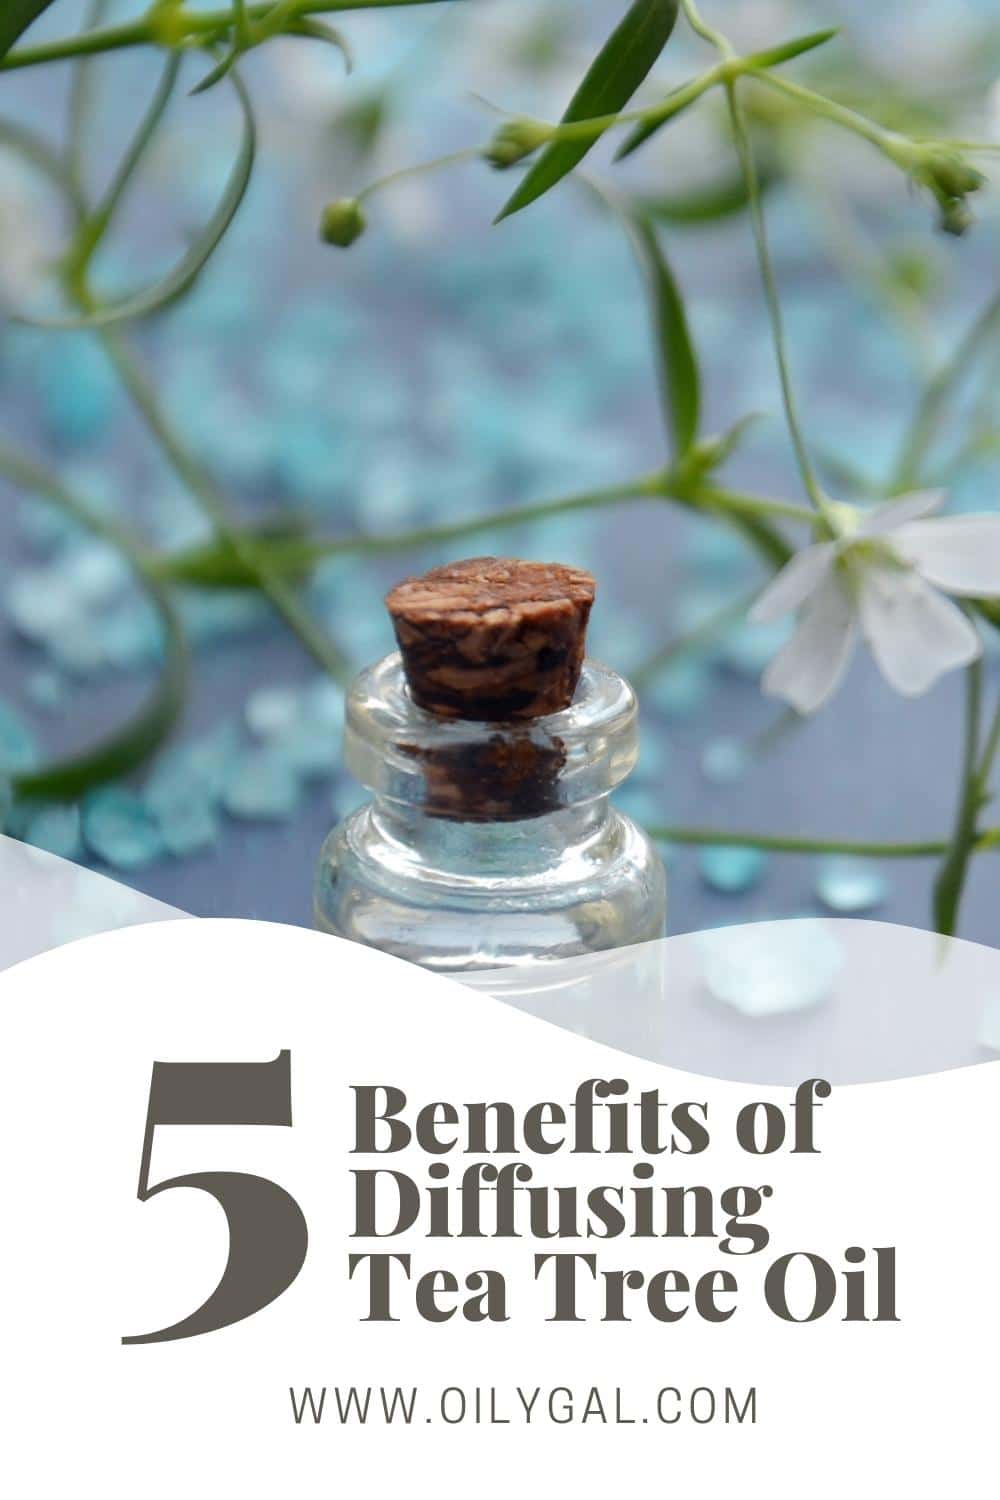 Benefits of Diffusing Tea Tree Oil